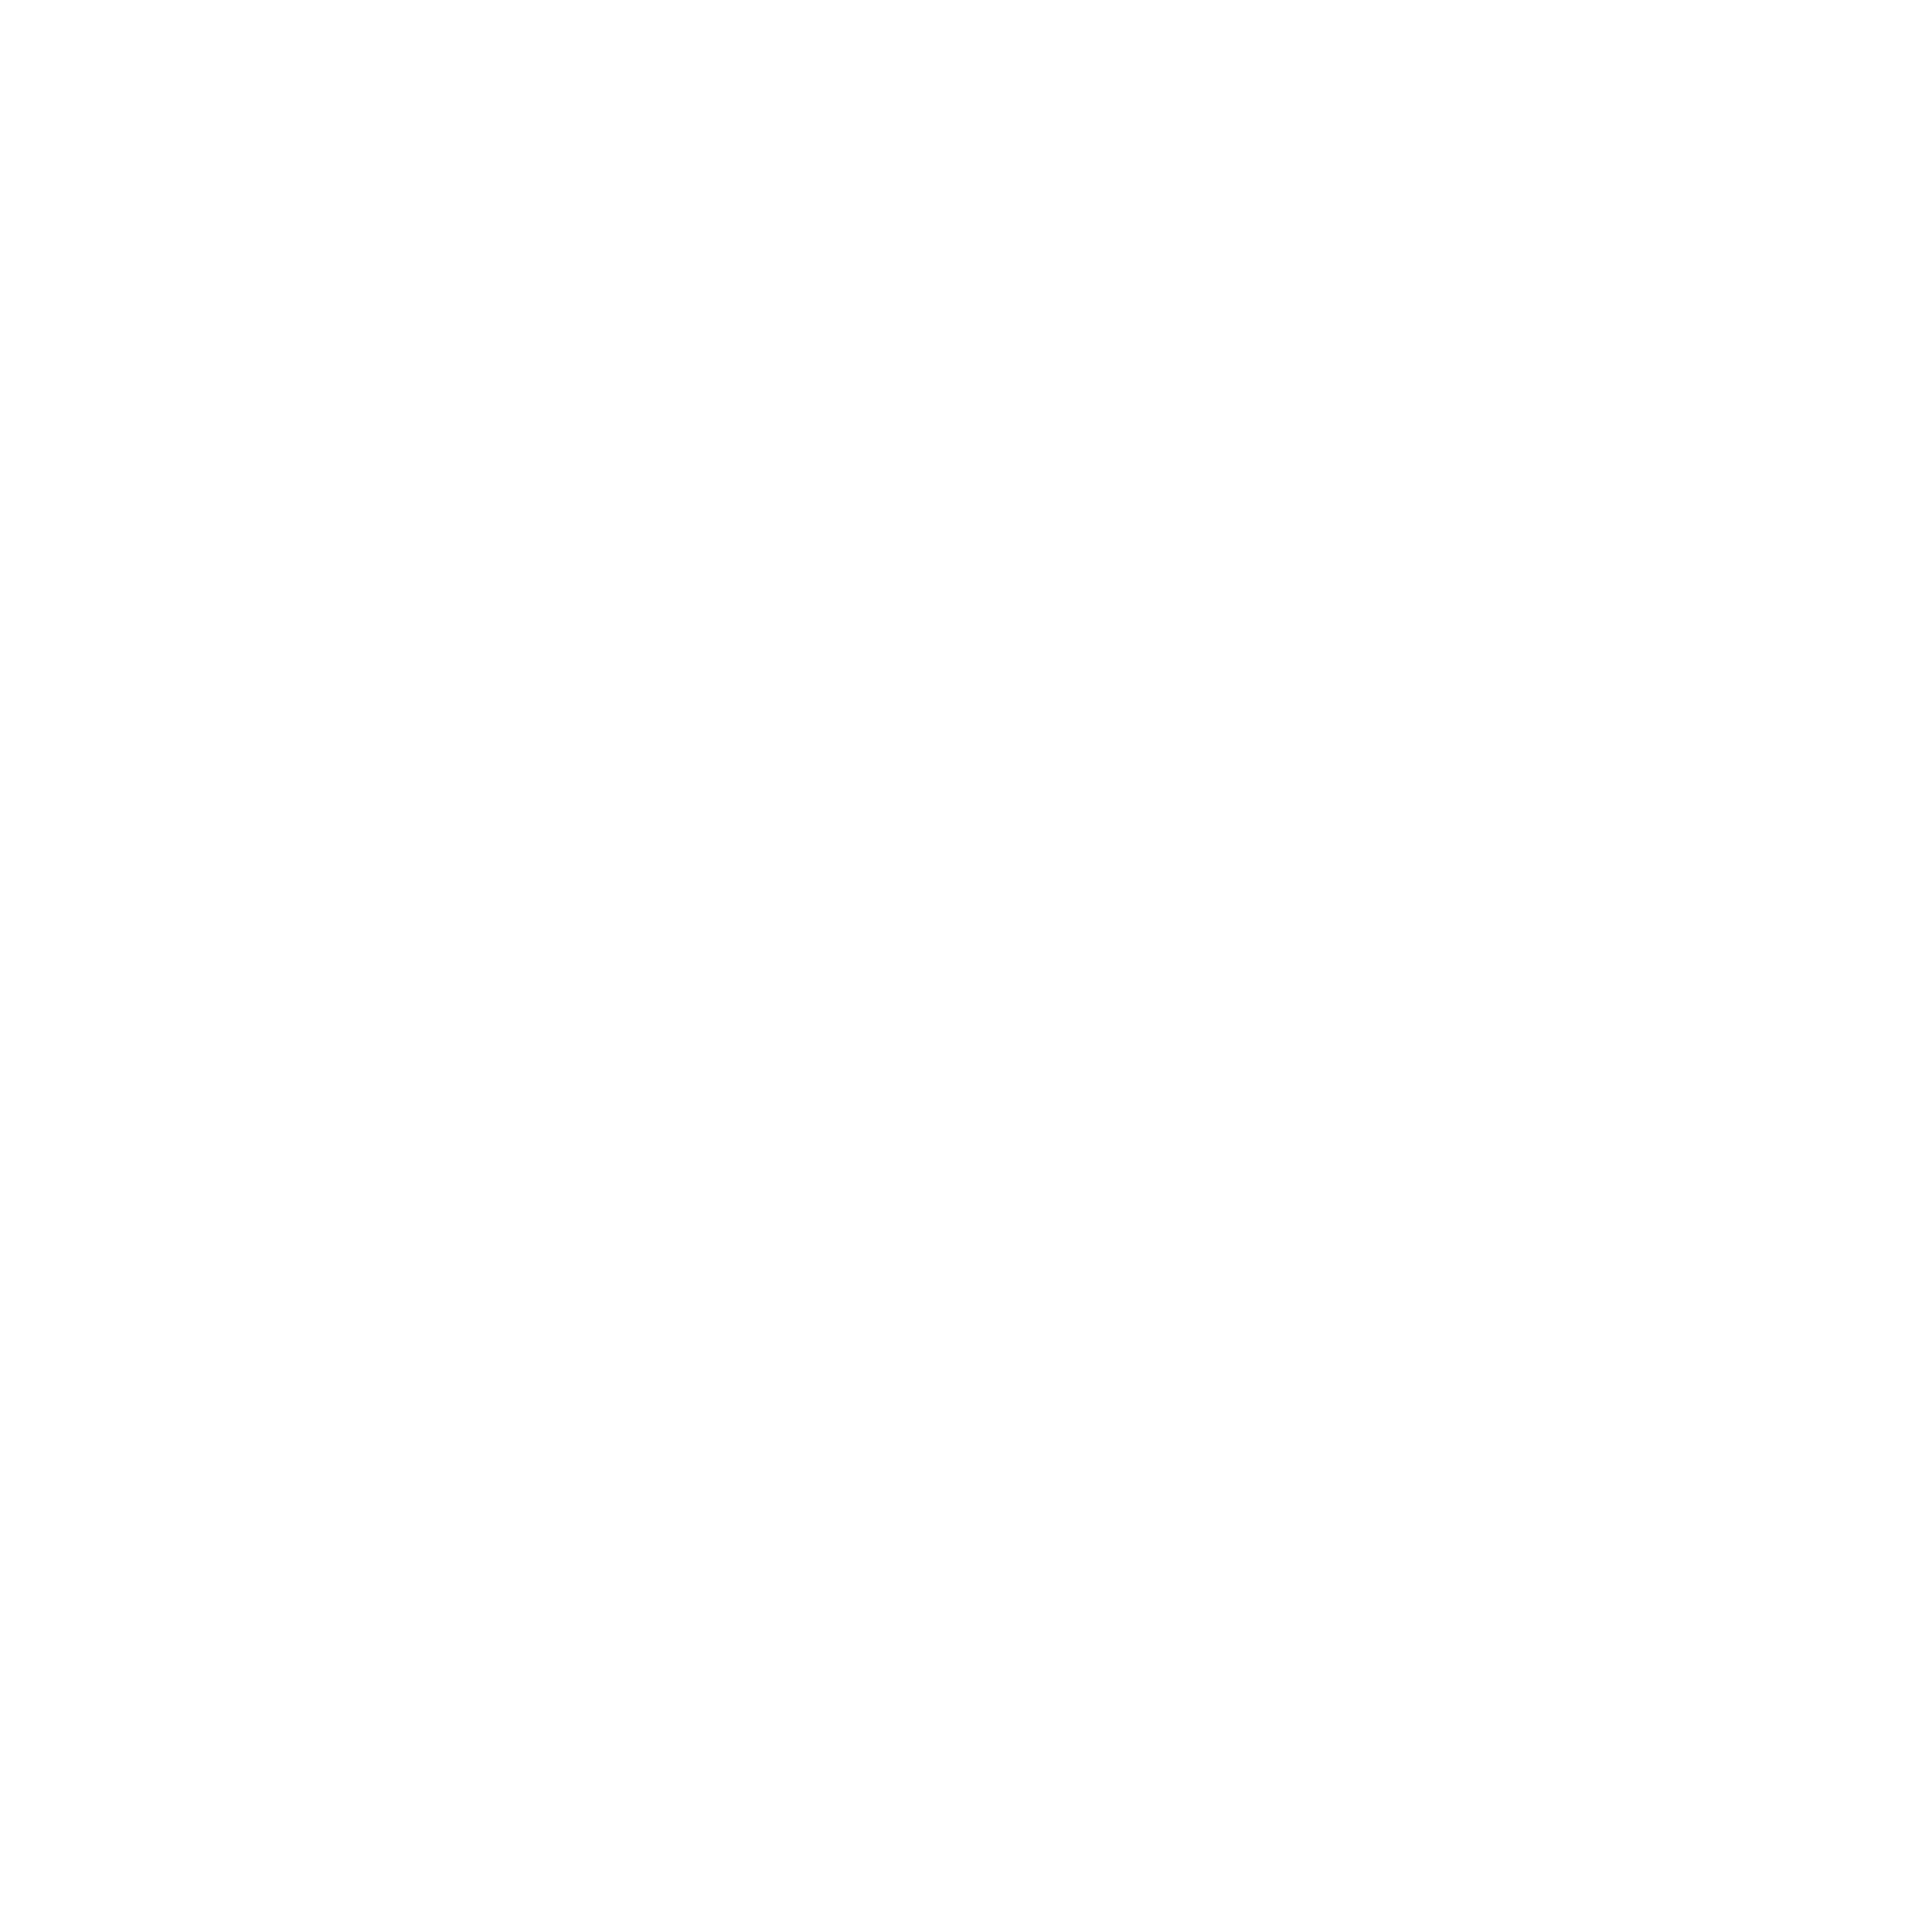 iata-1-logo-black-and-white